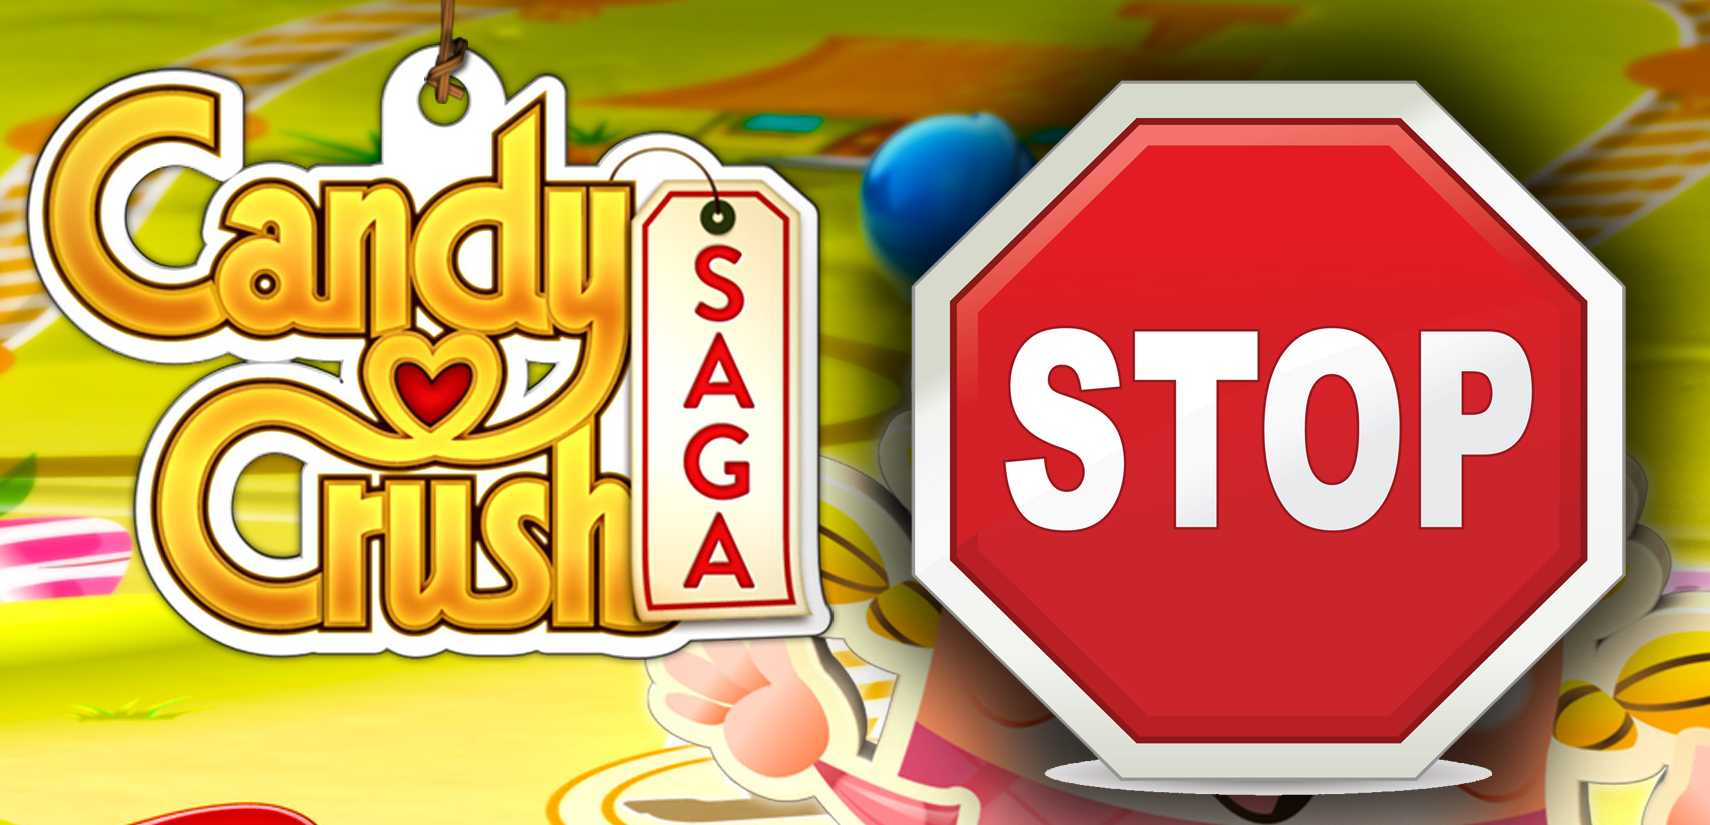 STOP candy crush saga